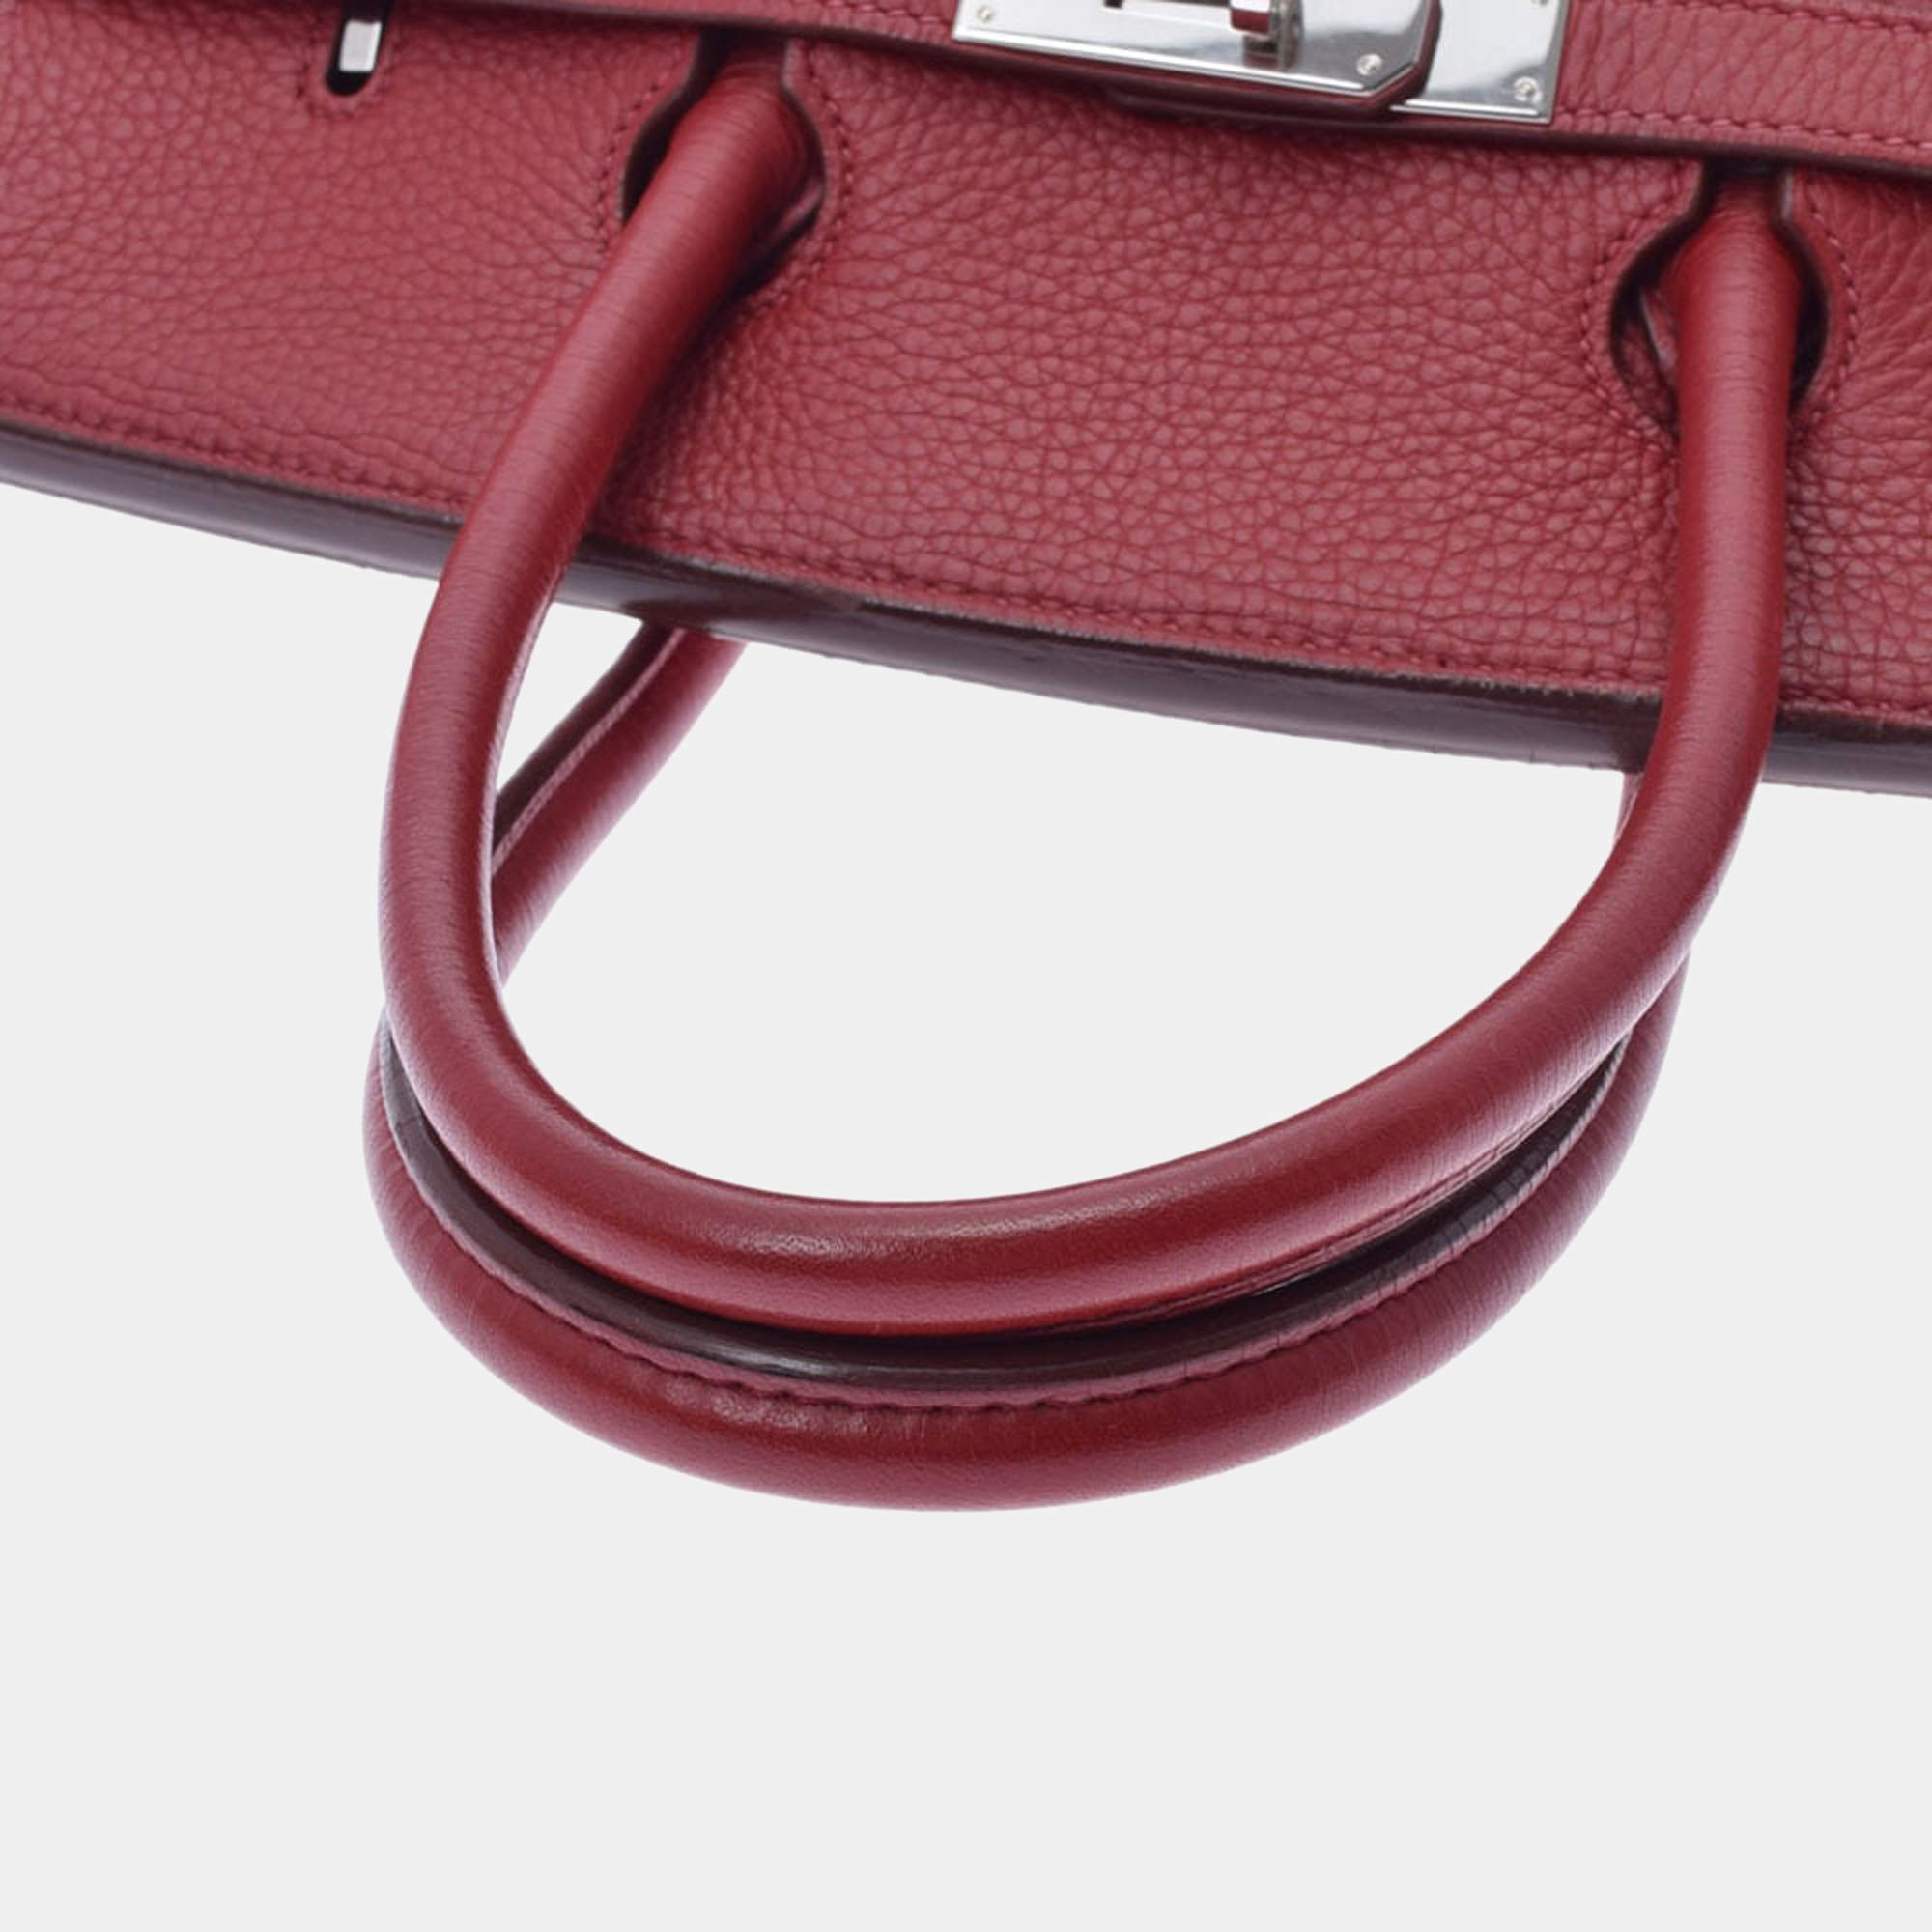 Hermes Rouge Garance Red Birkin Bag 35 Cm Purse Handbag